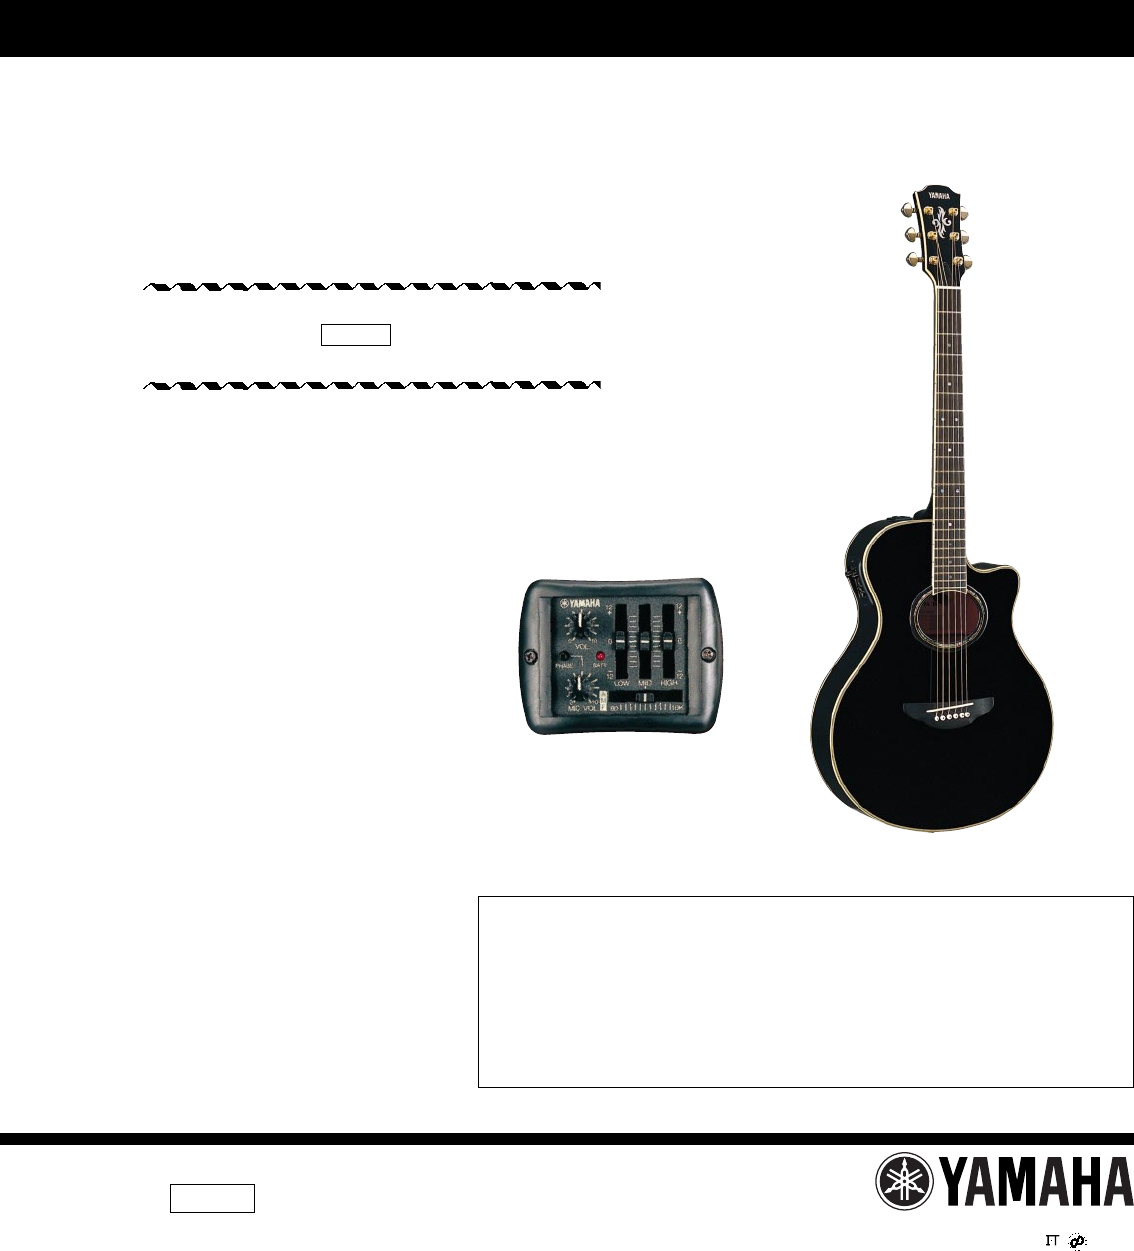 Yamaha Apx 9 12 Manual